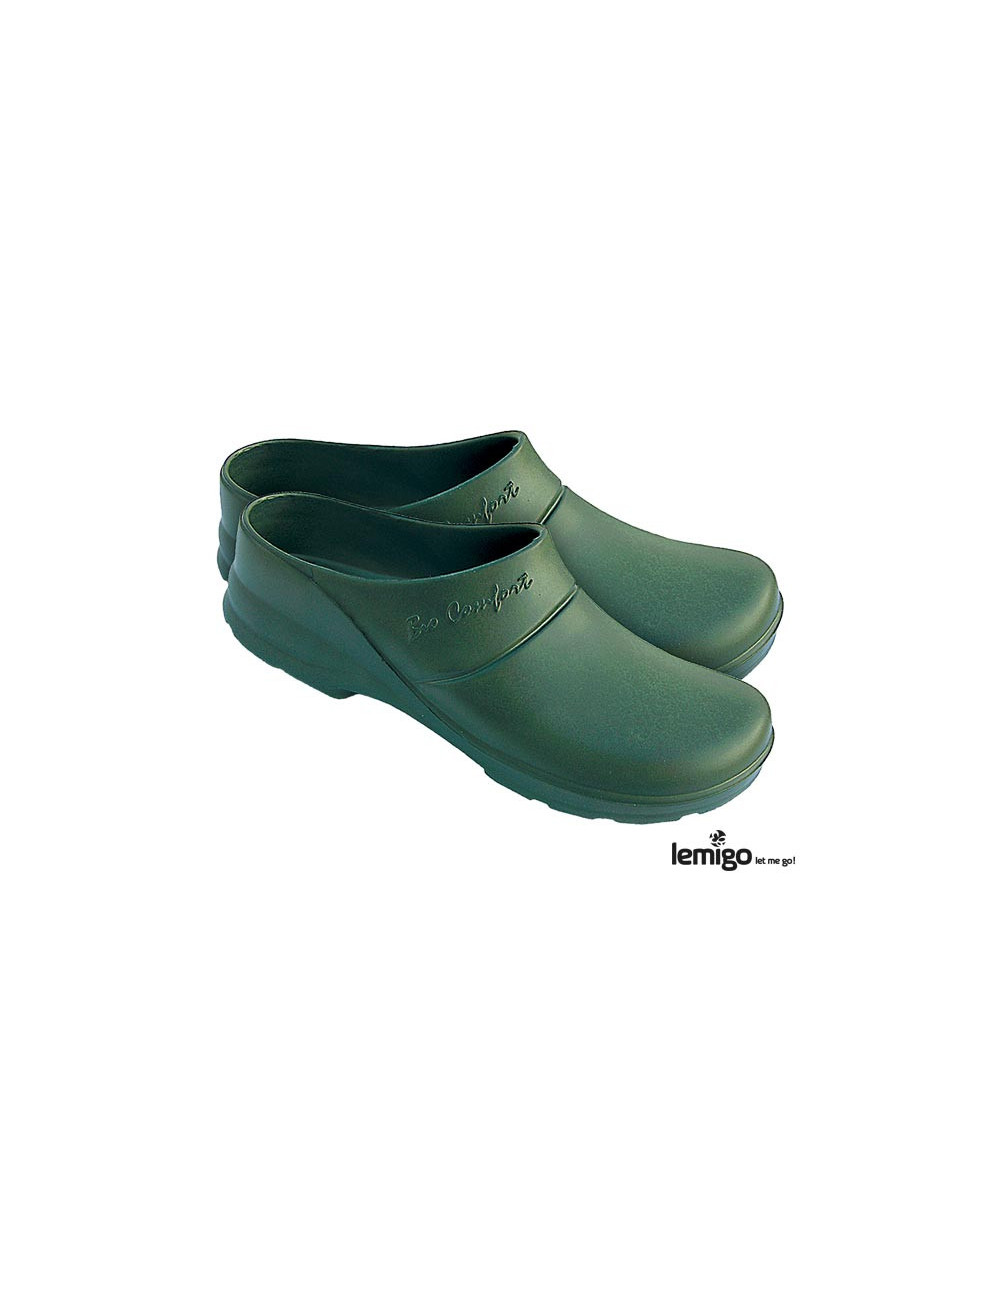 Blbiocomfort slippers with green Lemigo